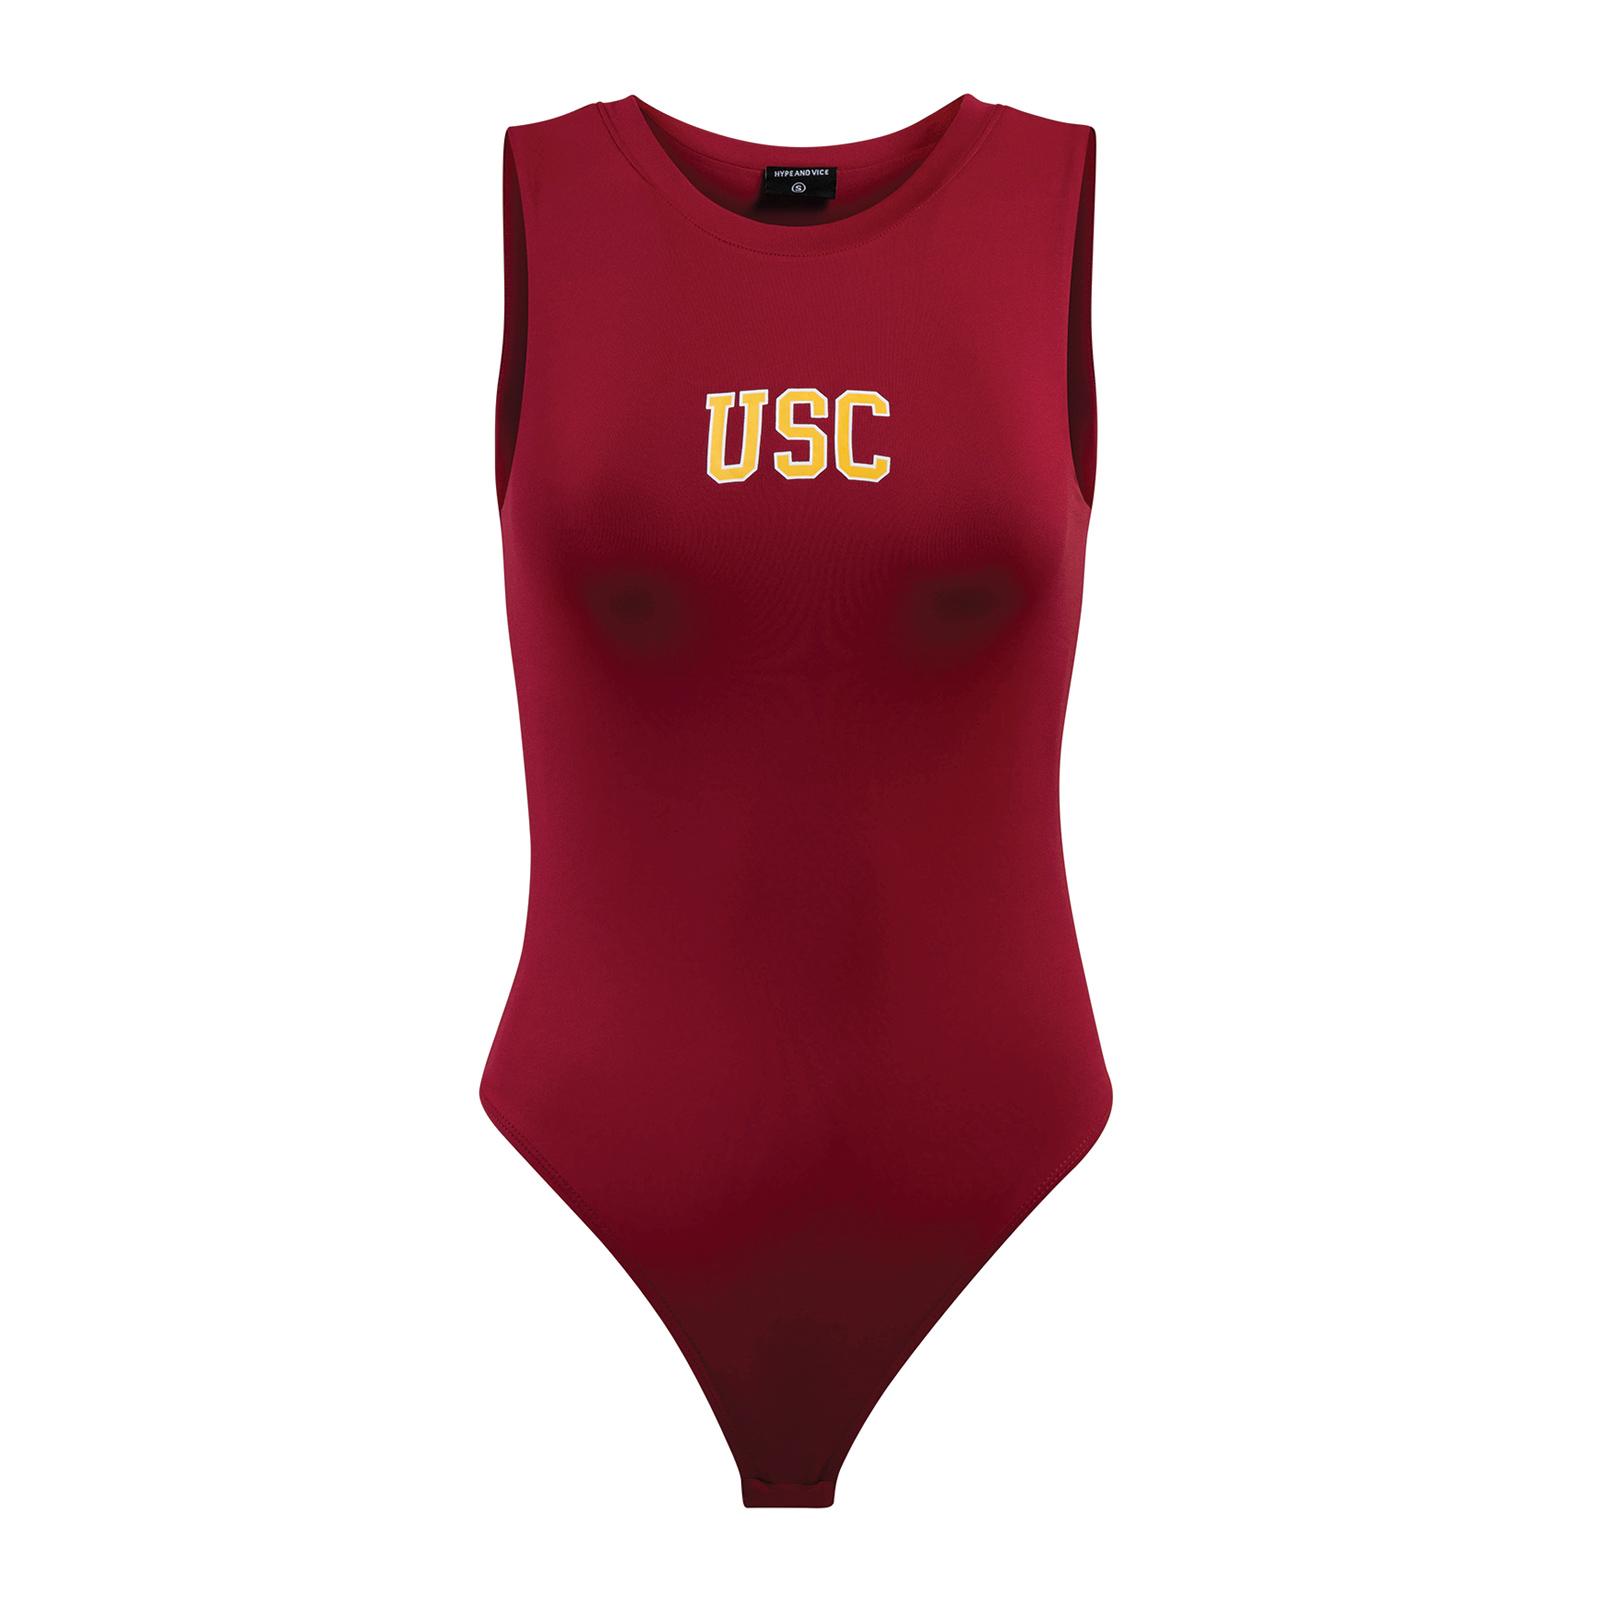 USC Womens Contouring Bodysuit image01